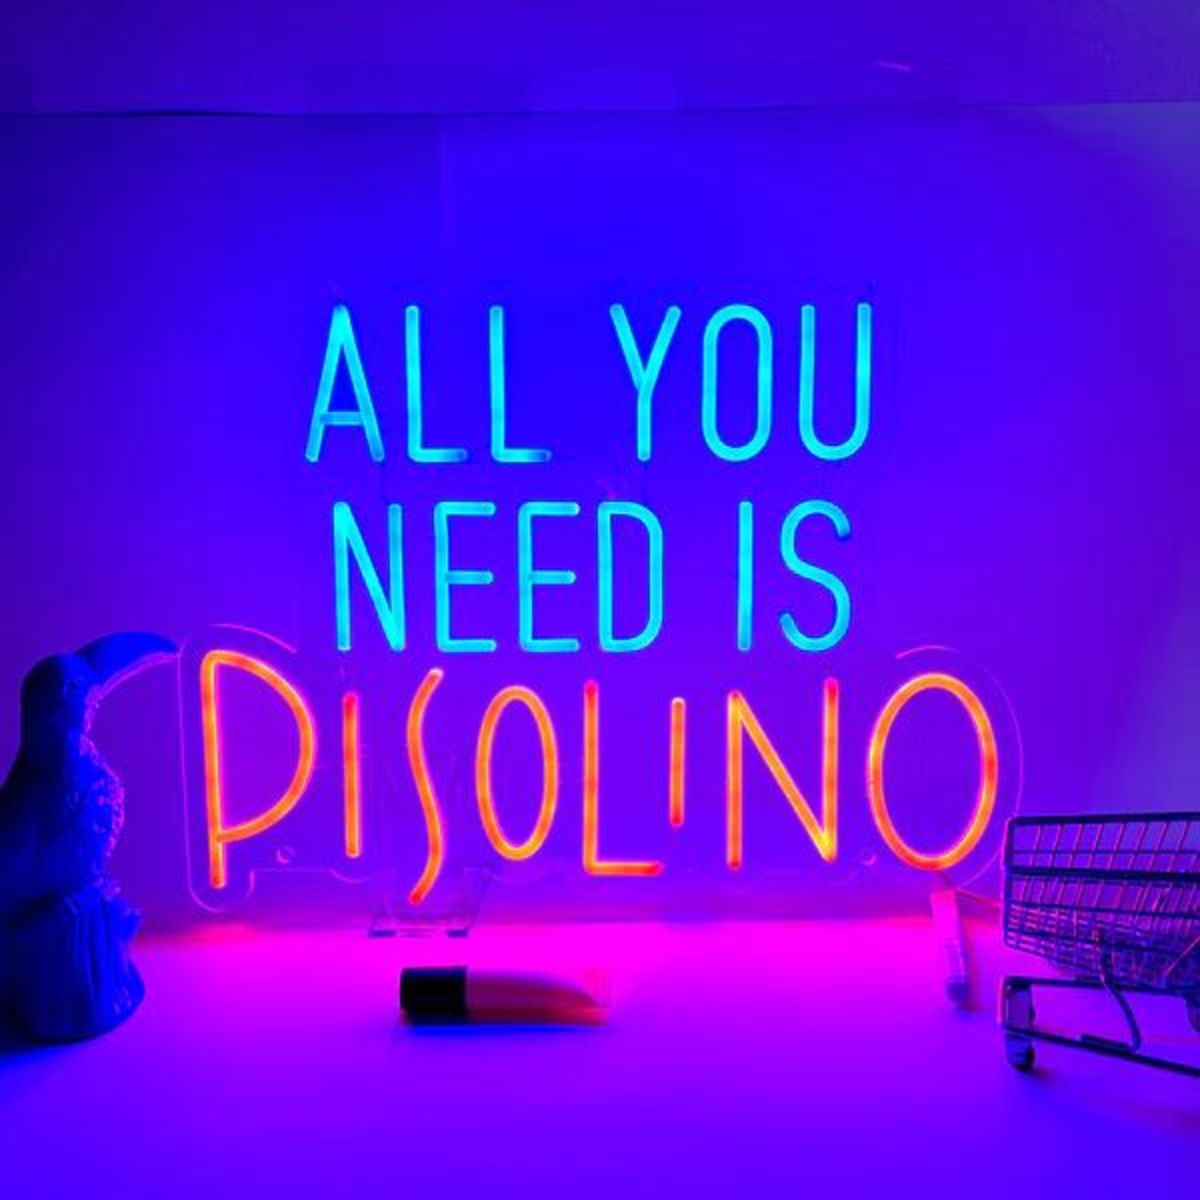 "ALL YOU NEED IS PISOLINO" INSULTI LUMINOSI SCRITTE LED